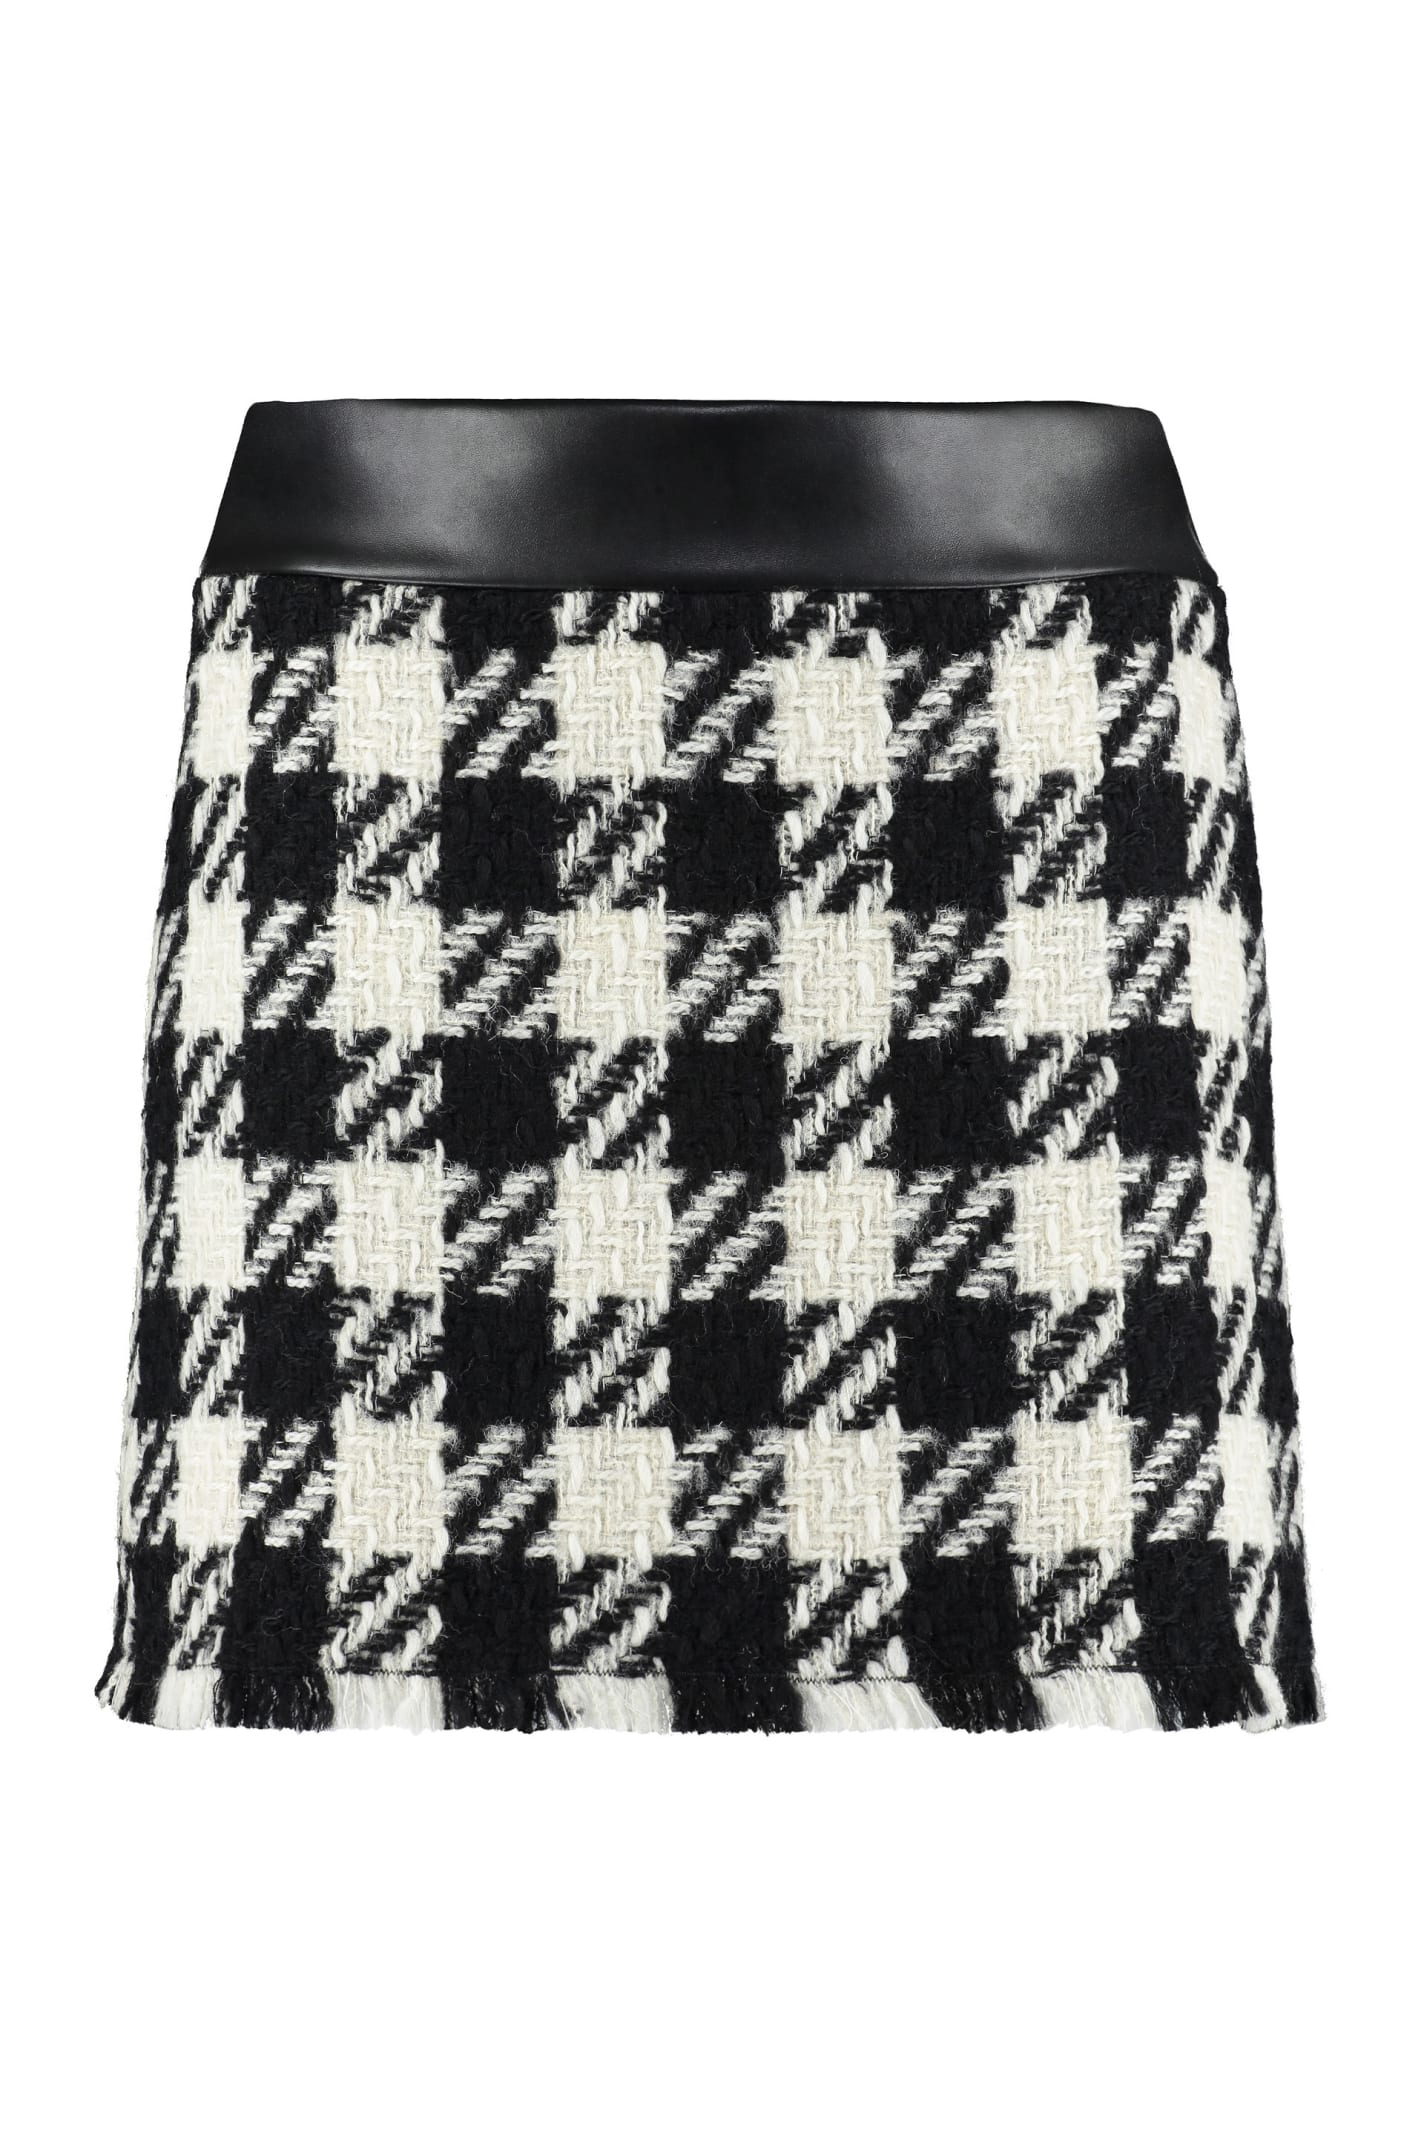 Dolce & Gabbana Houndstooth Mini Skirt